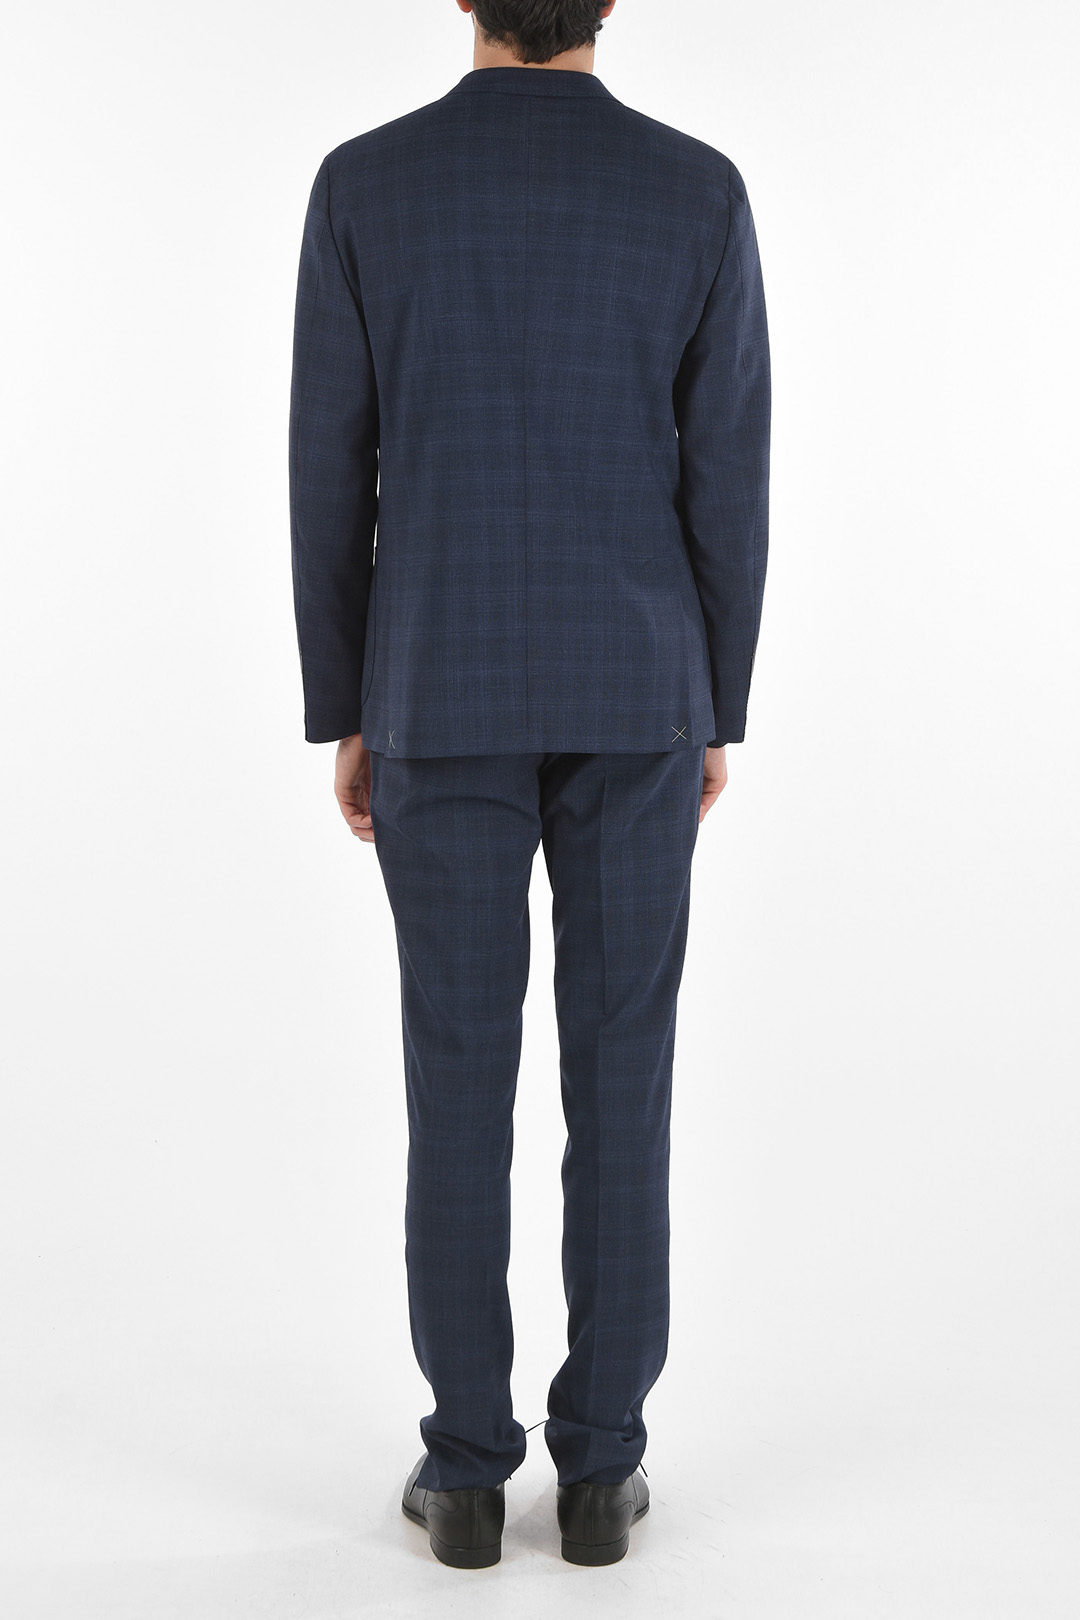 Corneliani CC COLLECTION SMART SUIT Unlined REWARD Suit men - Glamood ...